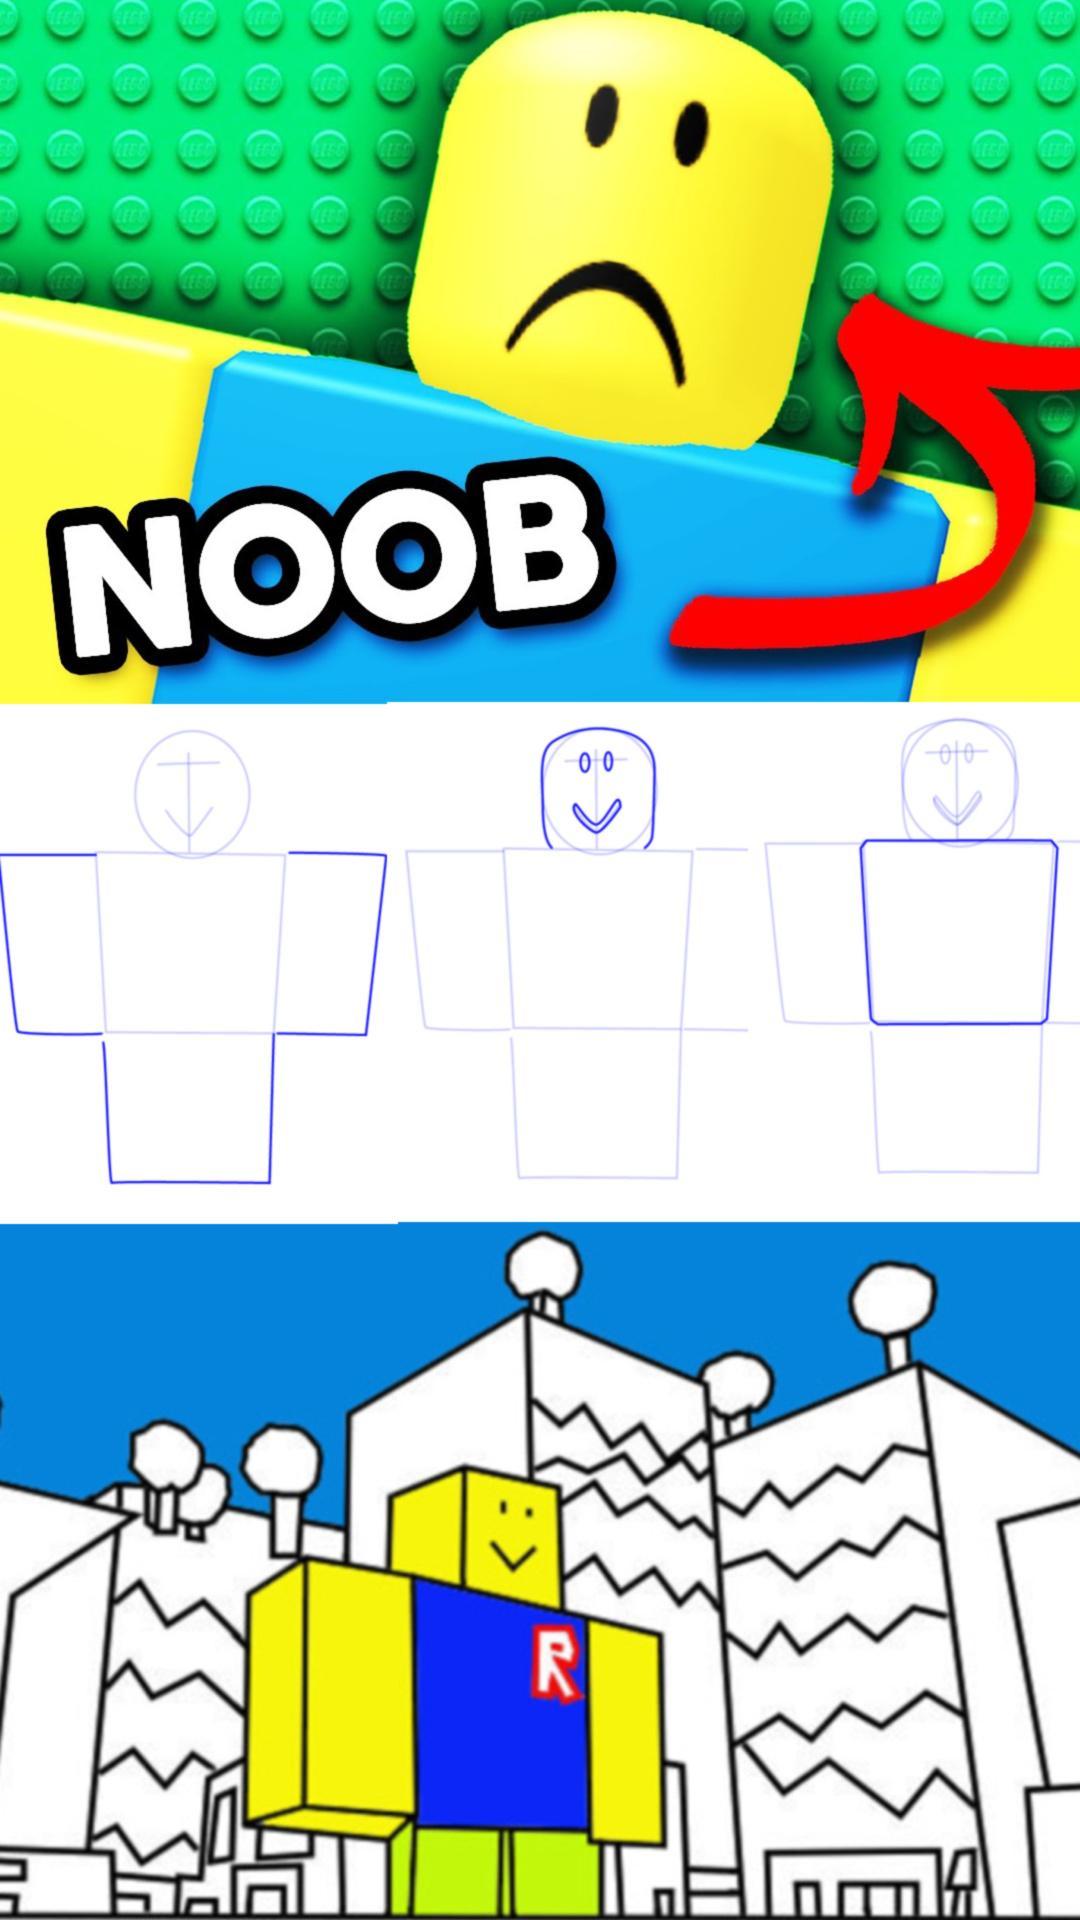 Como Dibujar Roblox For Android Apk Download - dibujos imagenes de roblox para dibujar